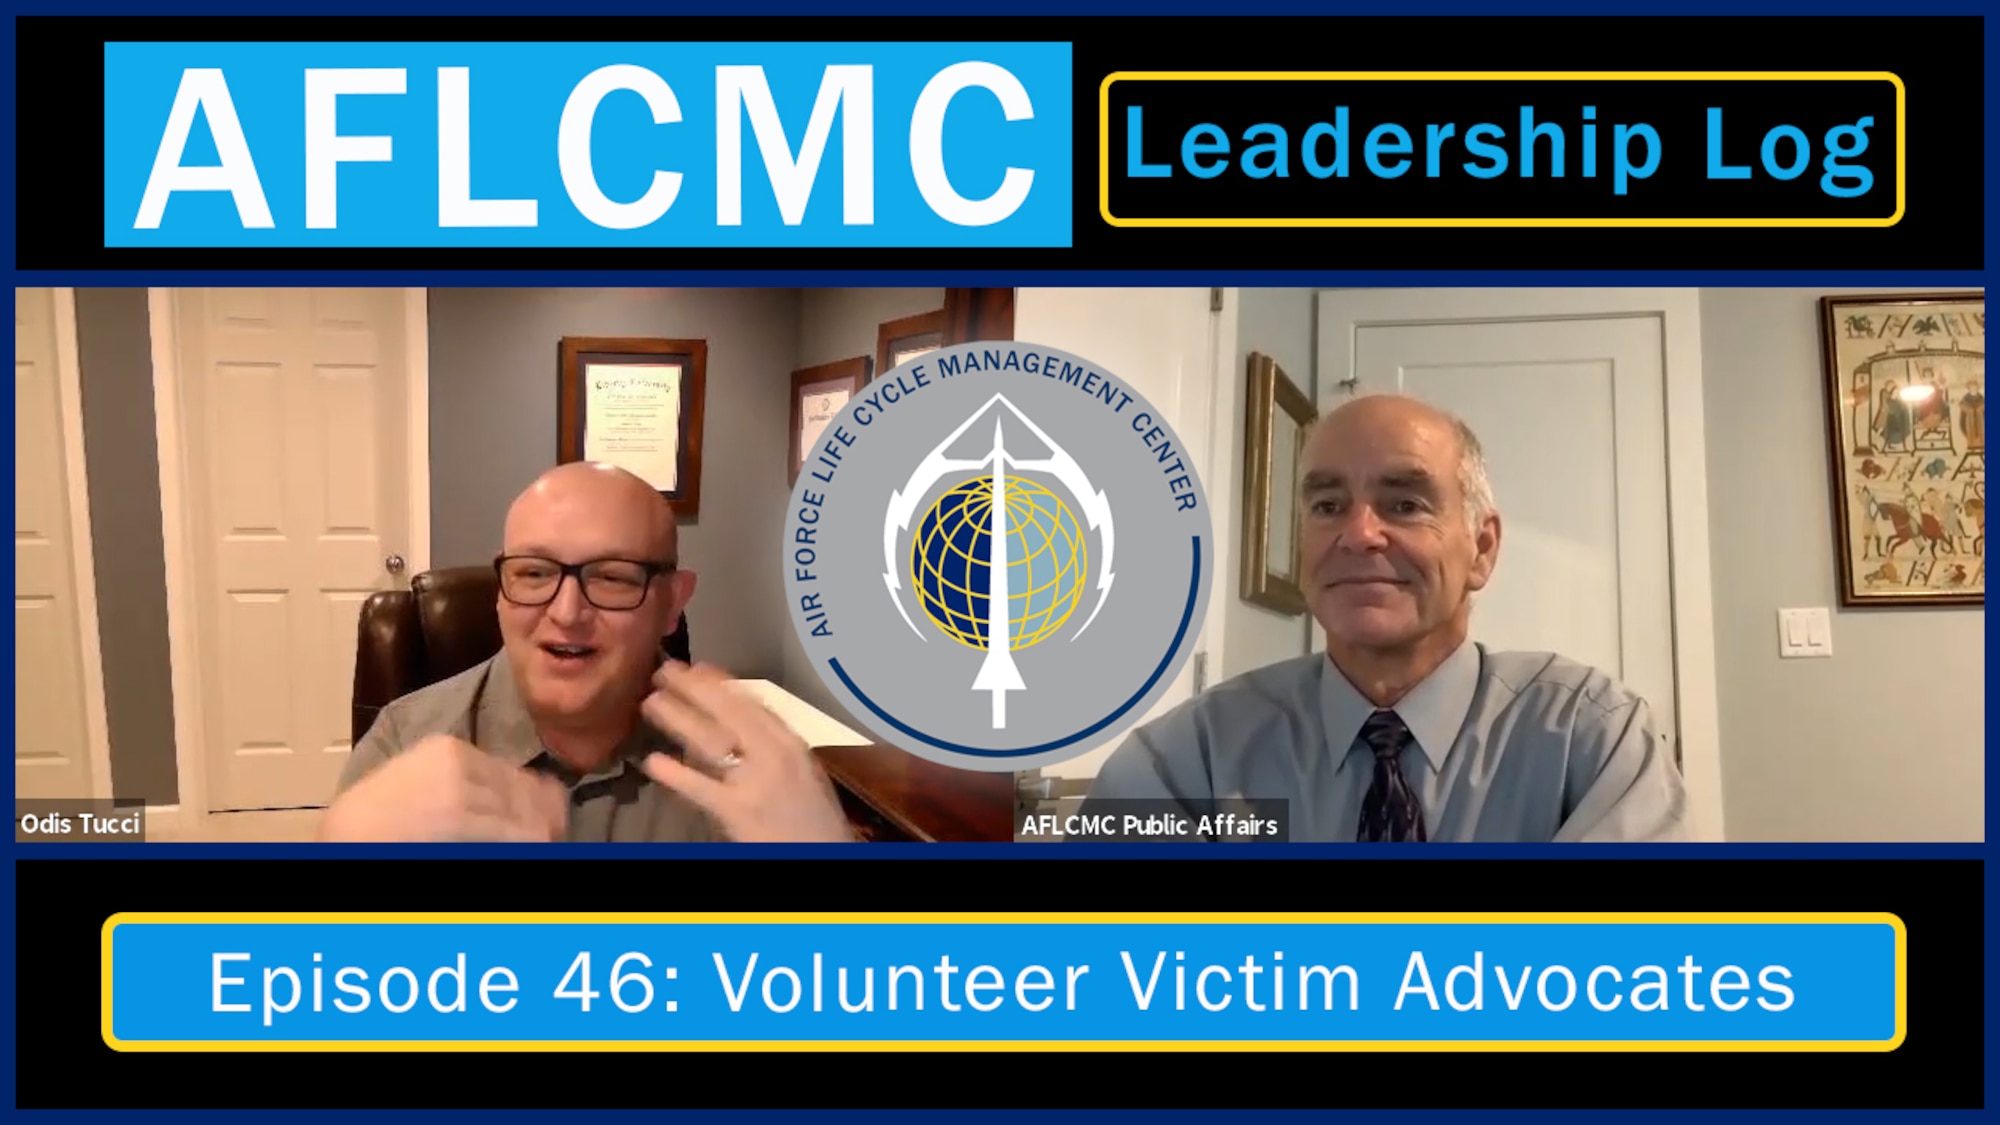 Leadership Log Episode 46: Volunteer Victim Advocates